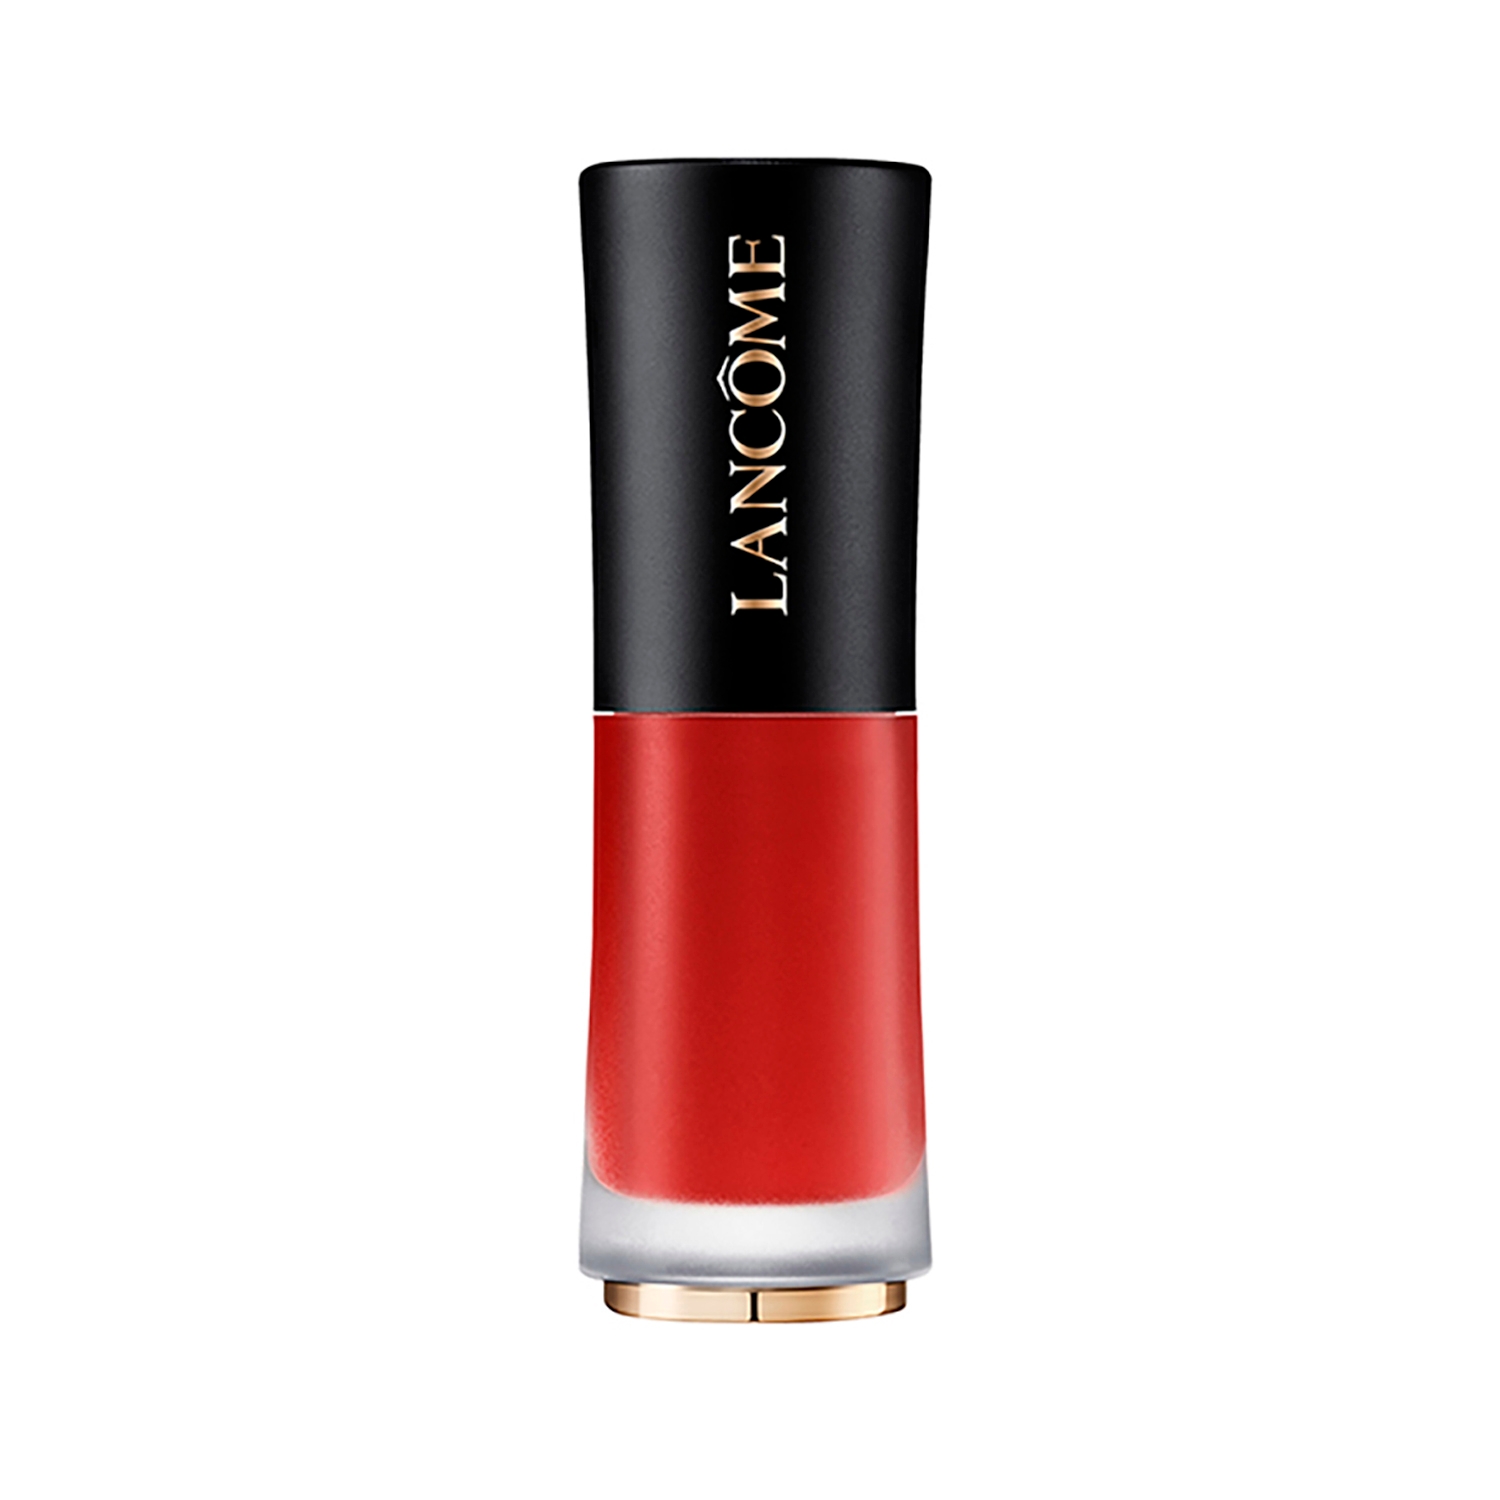 Lancome | Lancome L'Absolu Rouge Drama Ink Semi-Matte Liquid Lipstick - 138 Rouge Drama (6ml)